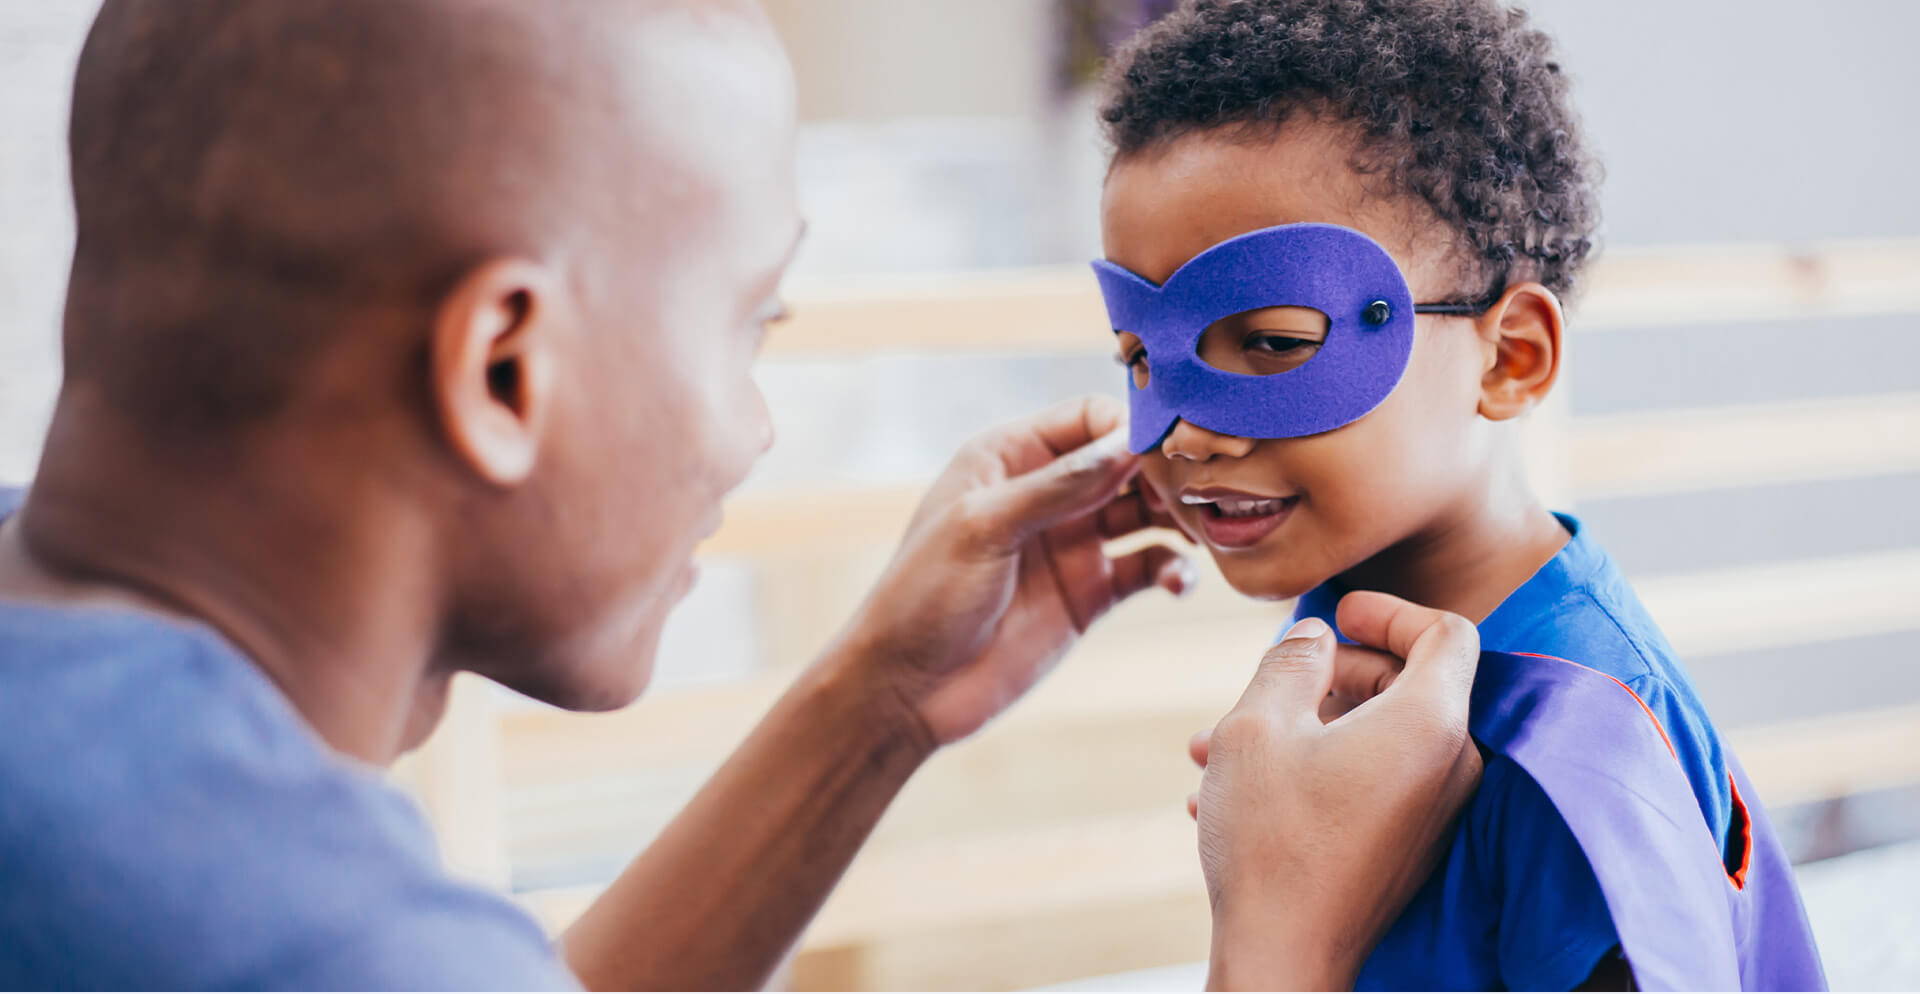 Man Putting On Superhero Mask On Child